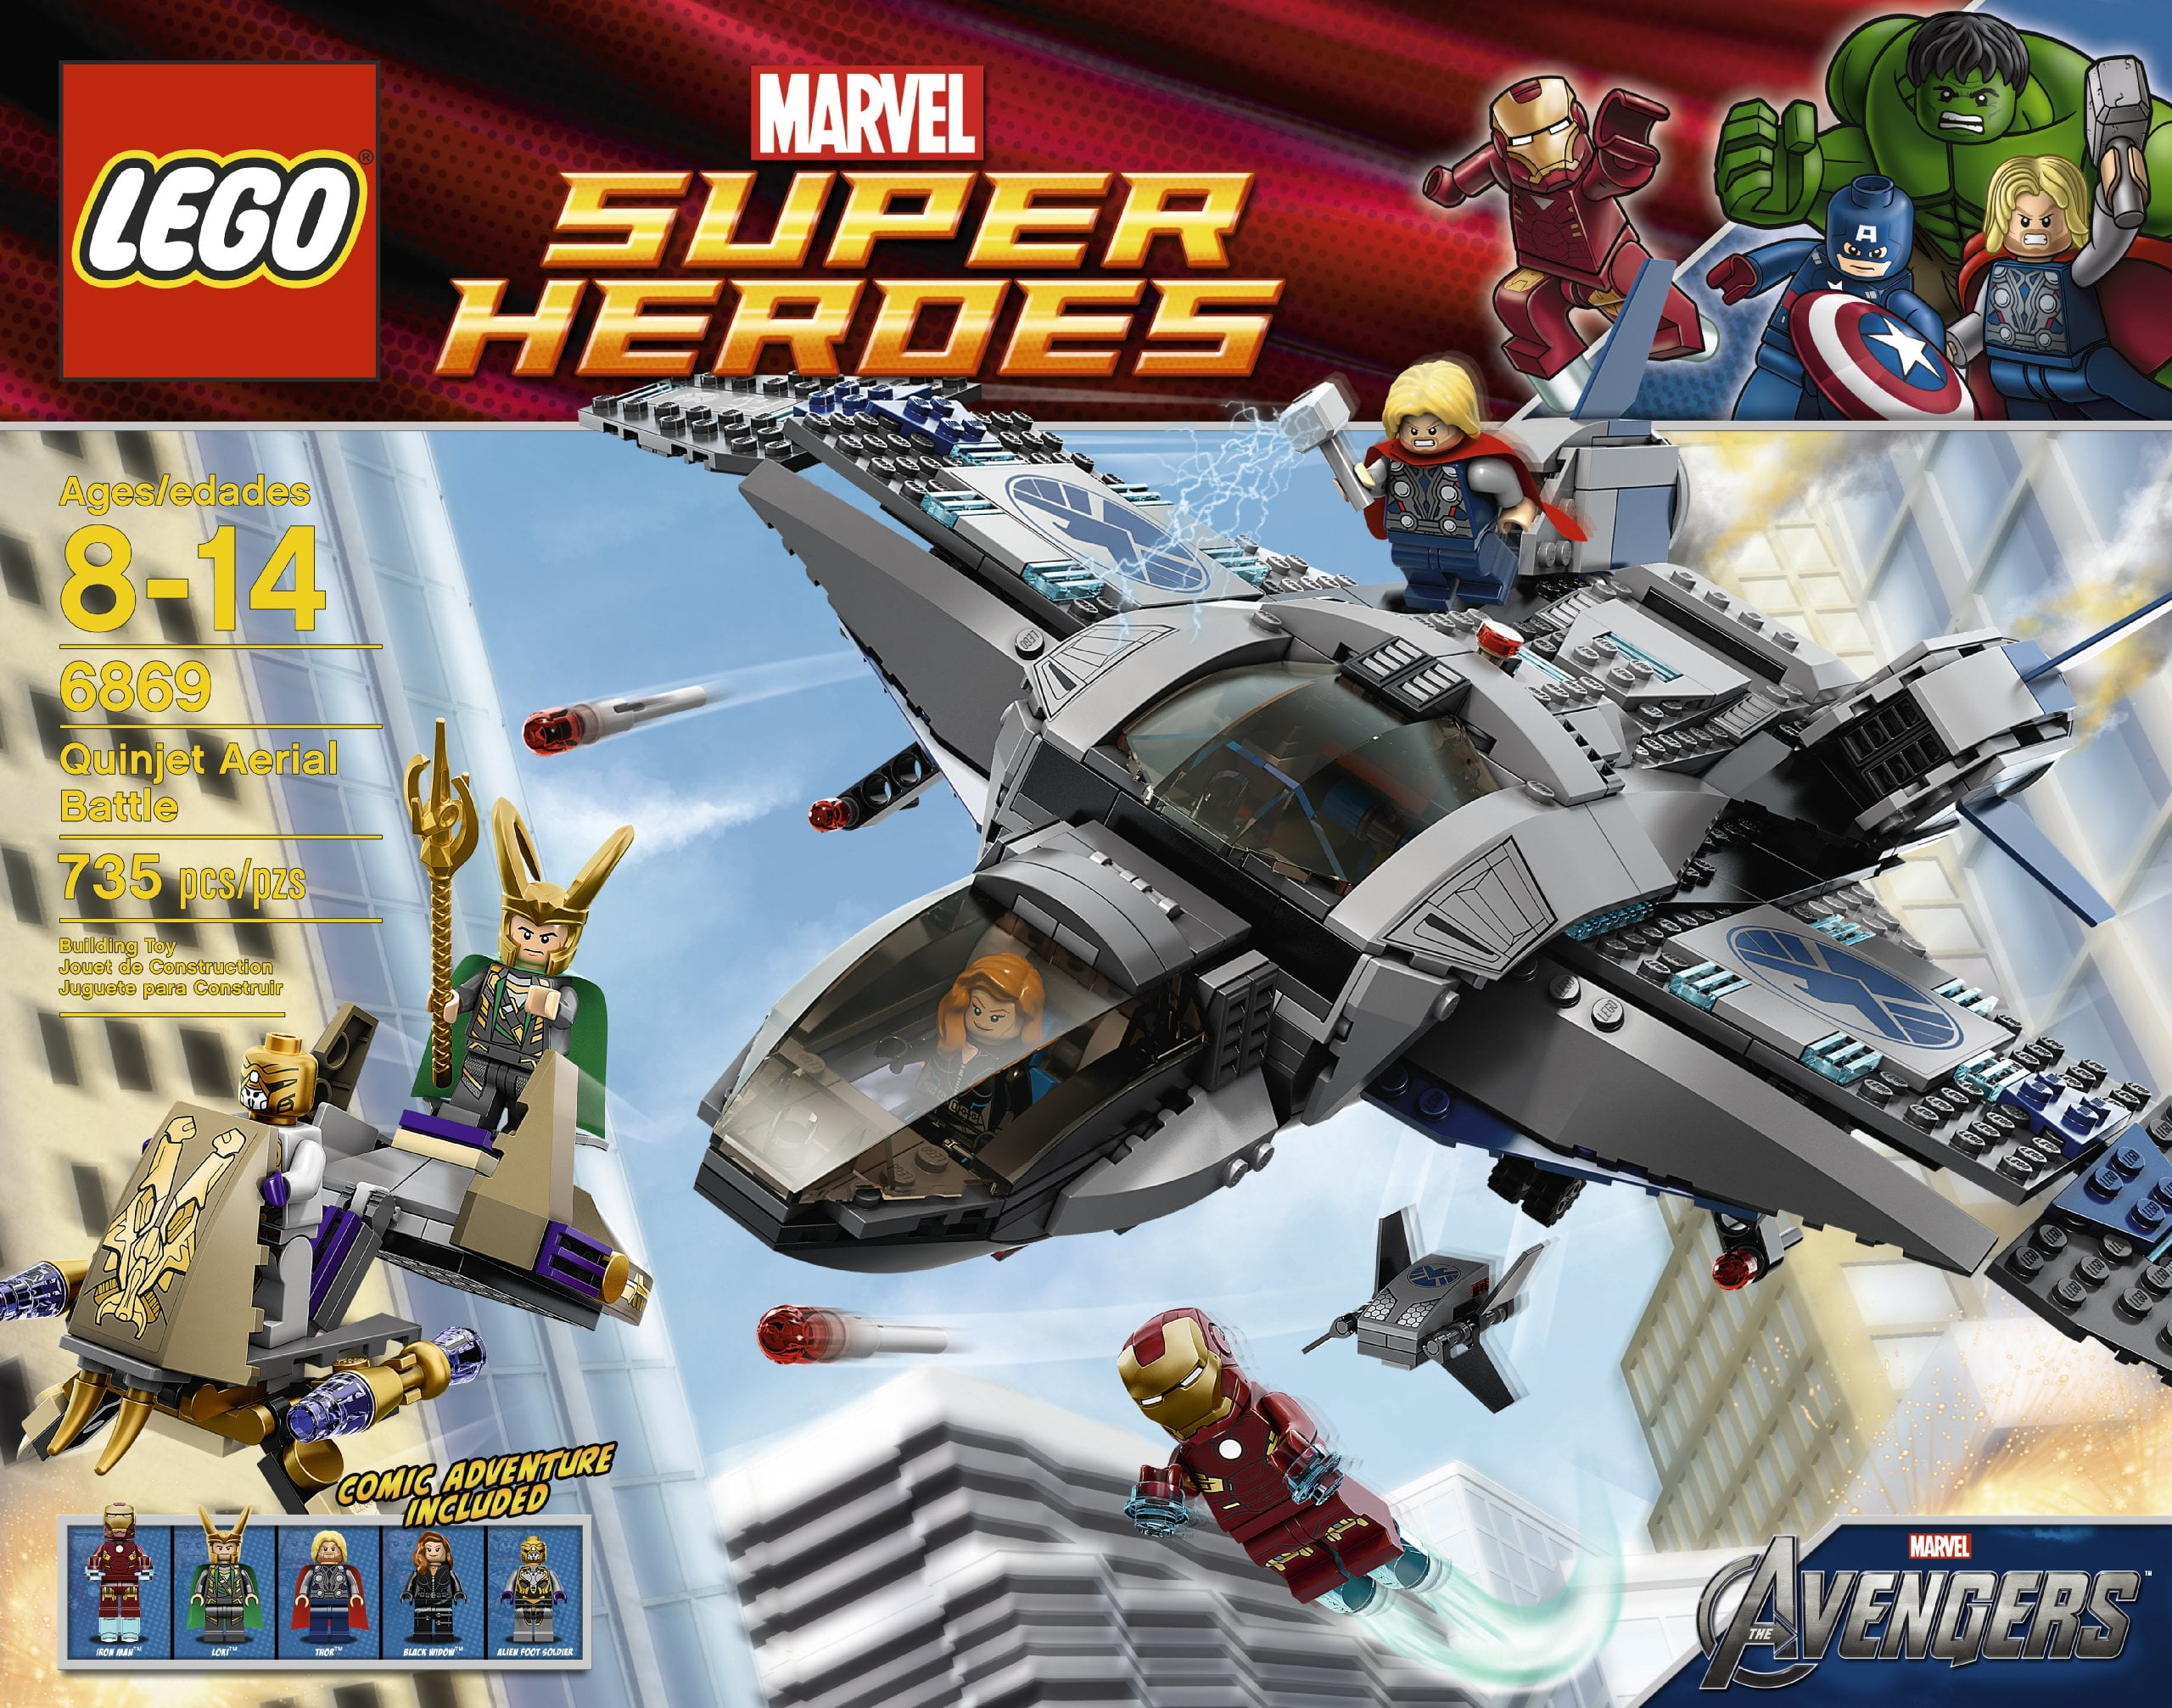 New Lego 6869 Super Heroes QUINJET AERIAL BATTLE 